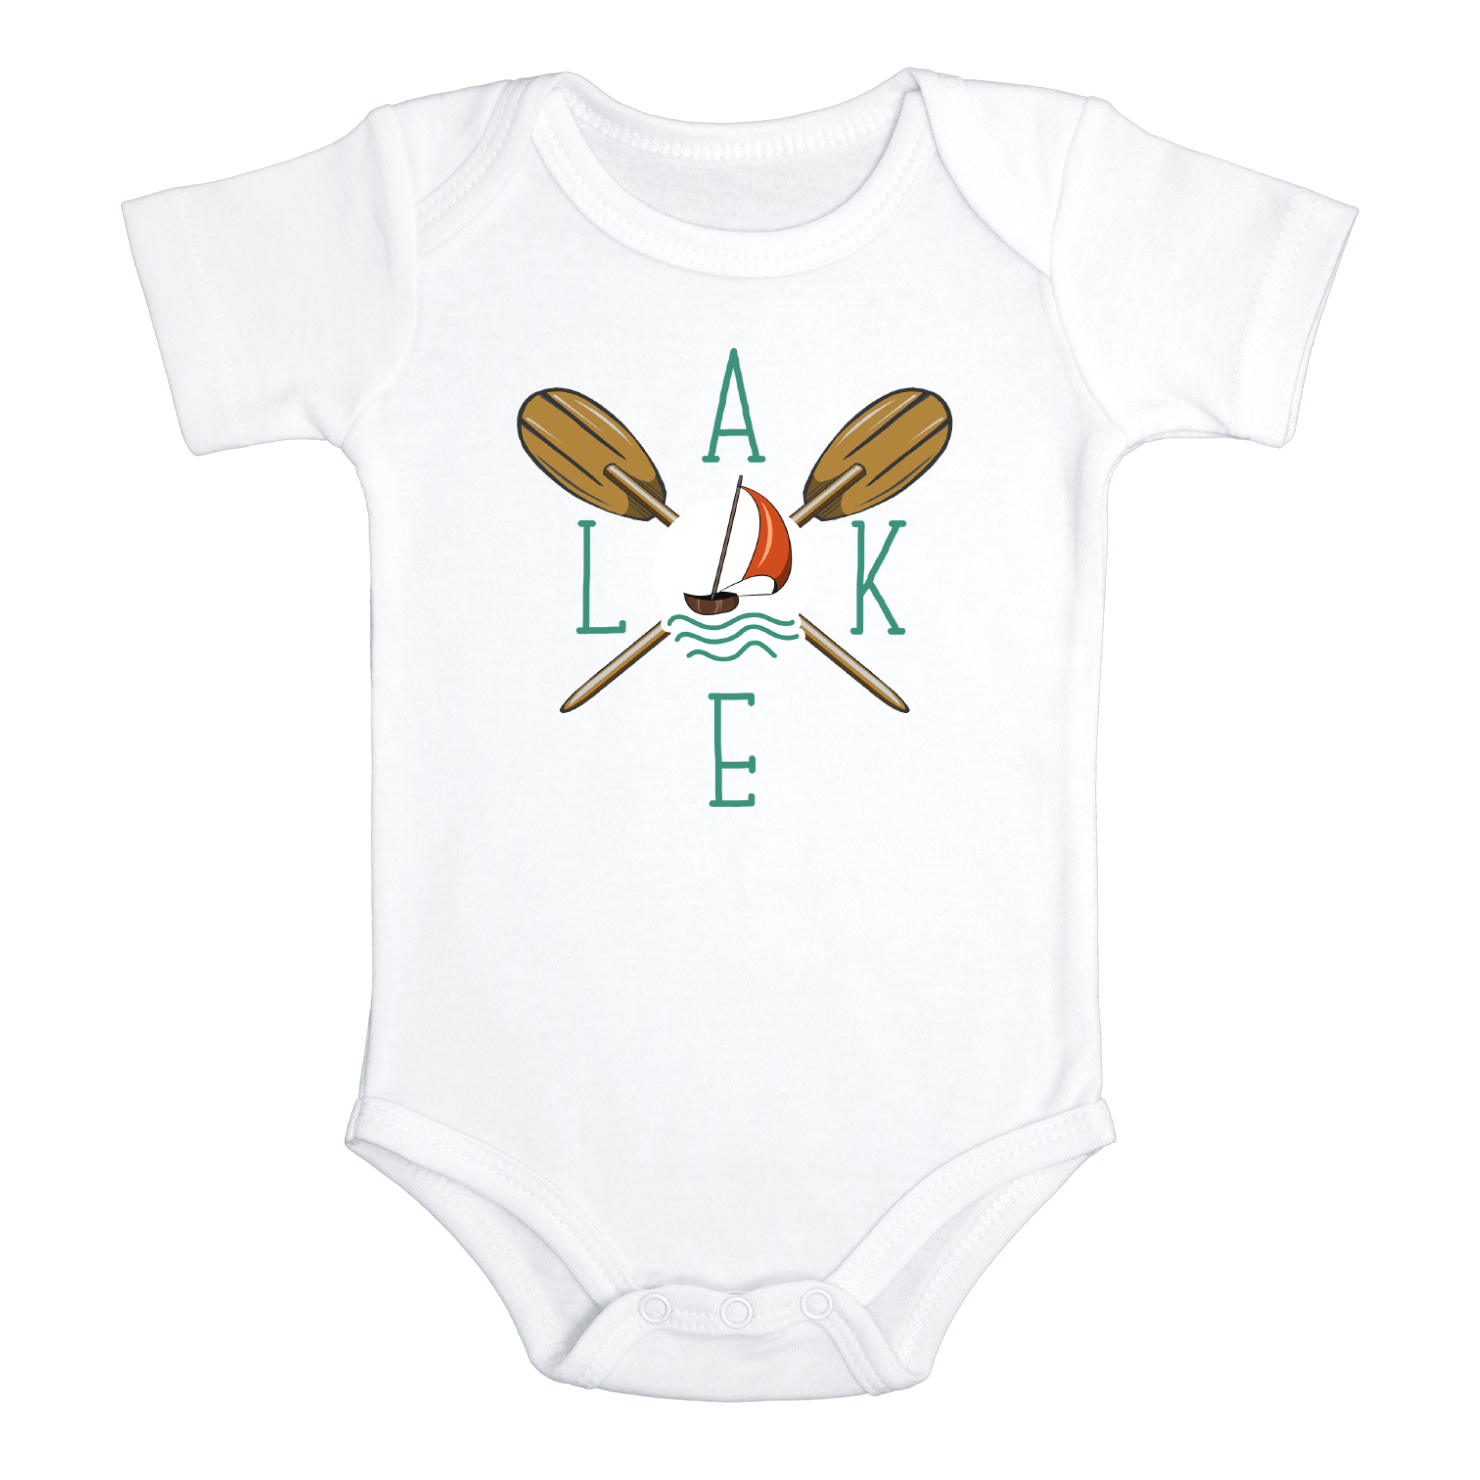 LAKE Funny baby onesies Sail Boat bodysuit (white: short or long sleeve)